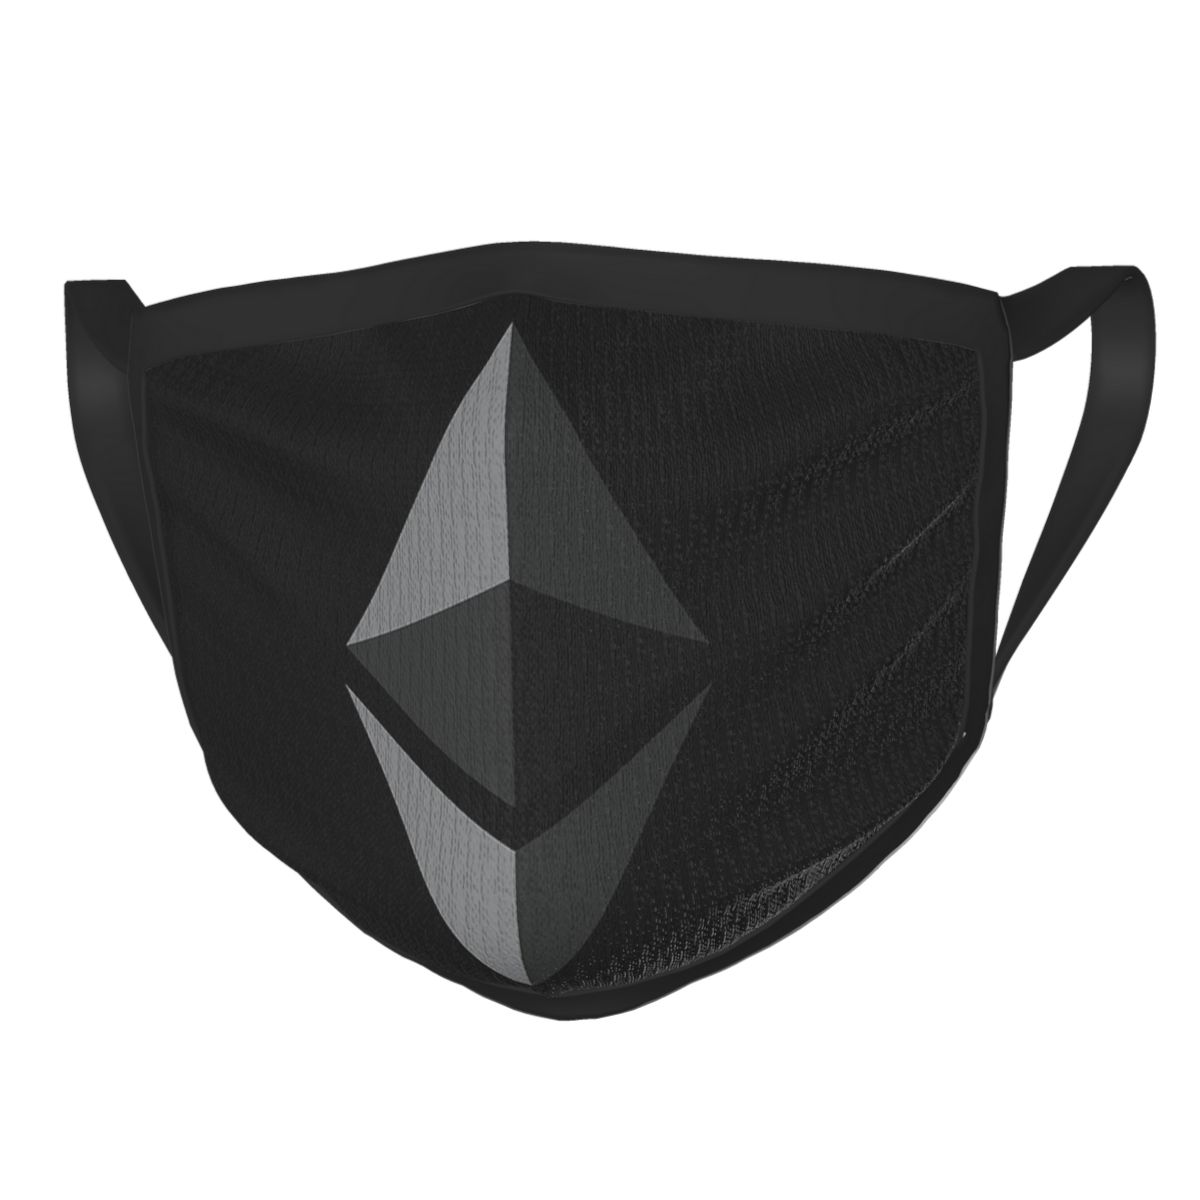 Ethereum face mask